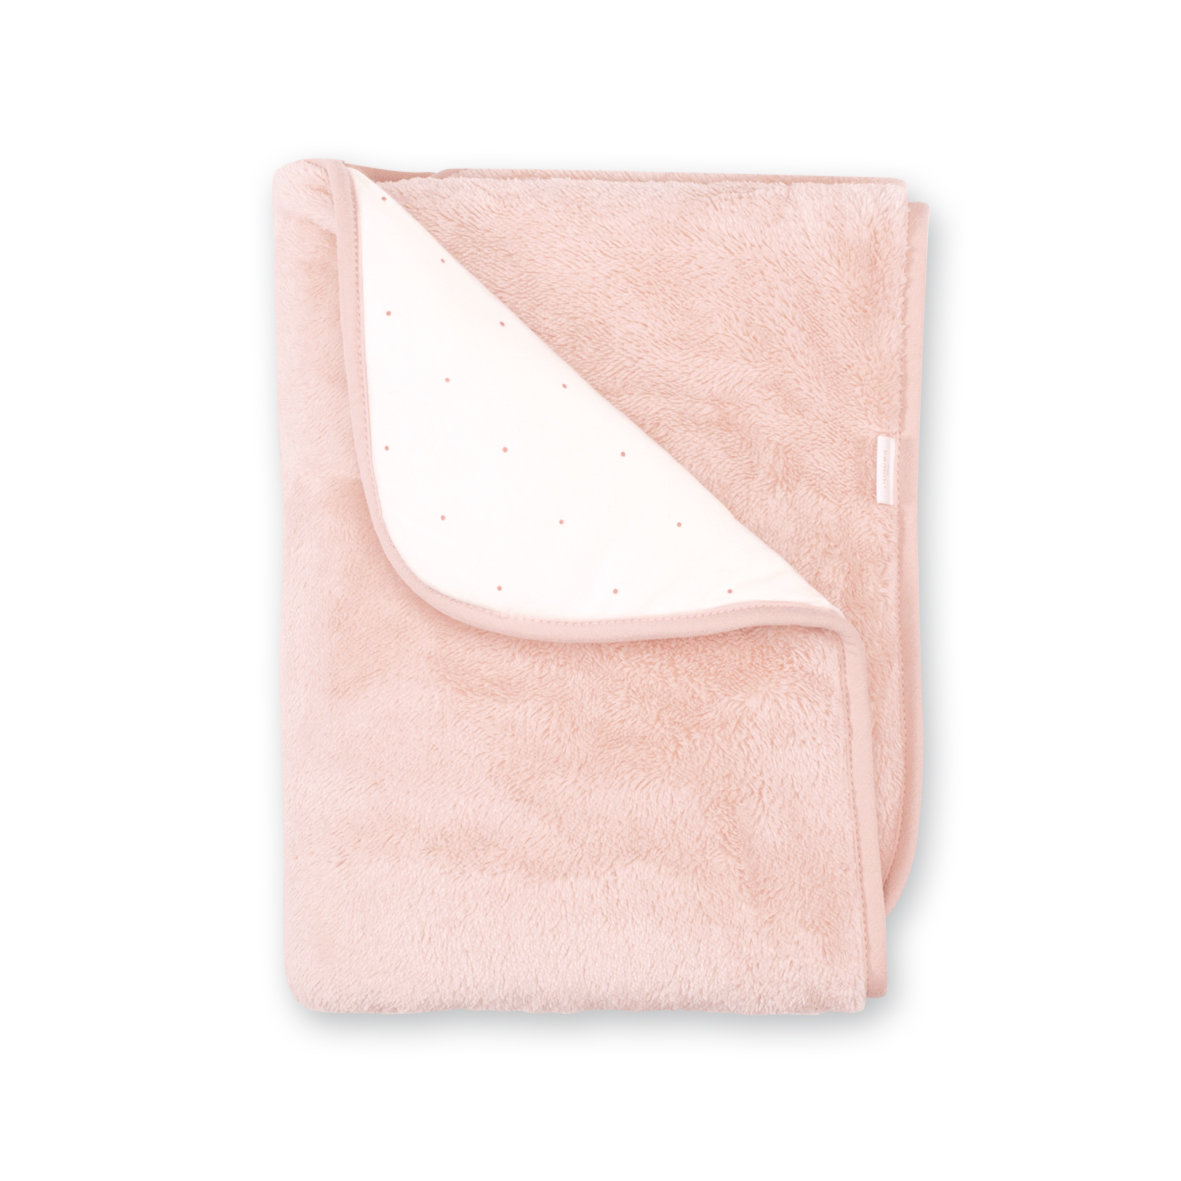 Blanket Pady jersey + softy 75x100cm CHOUX Old pink